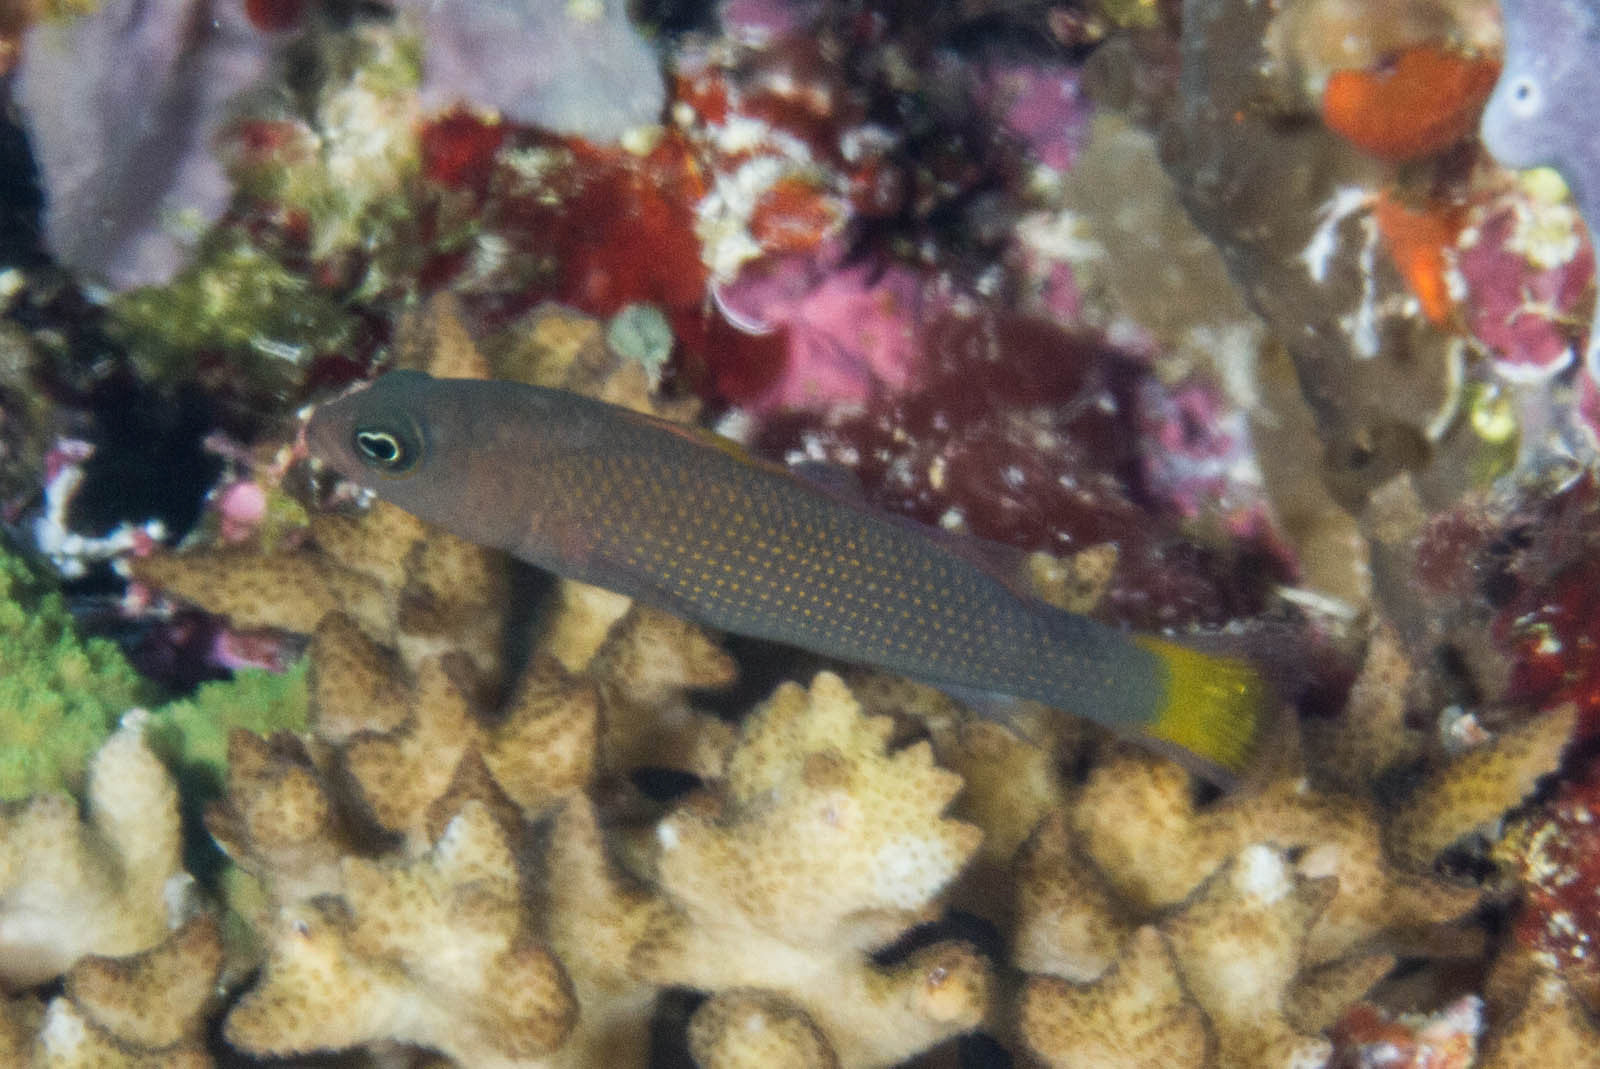 Marshallensis Pseudochromis